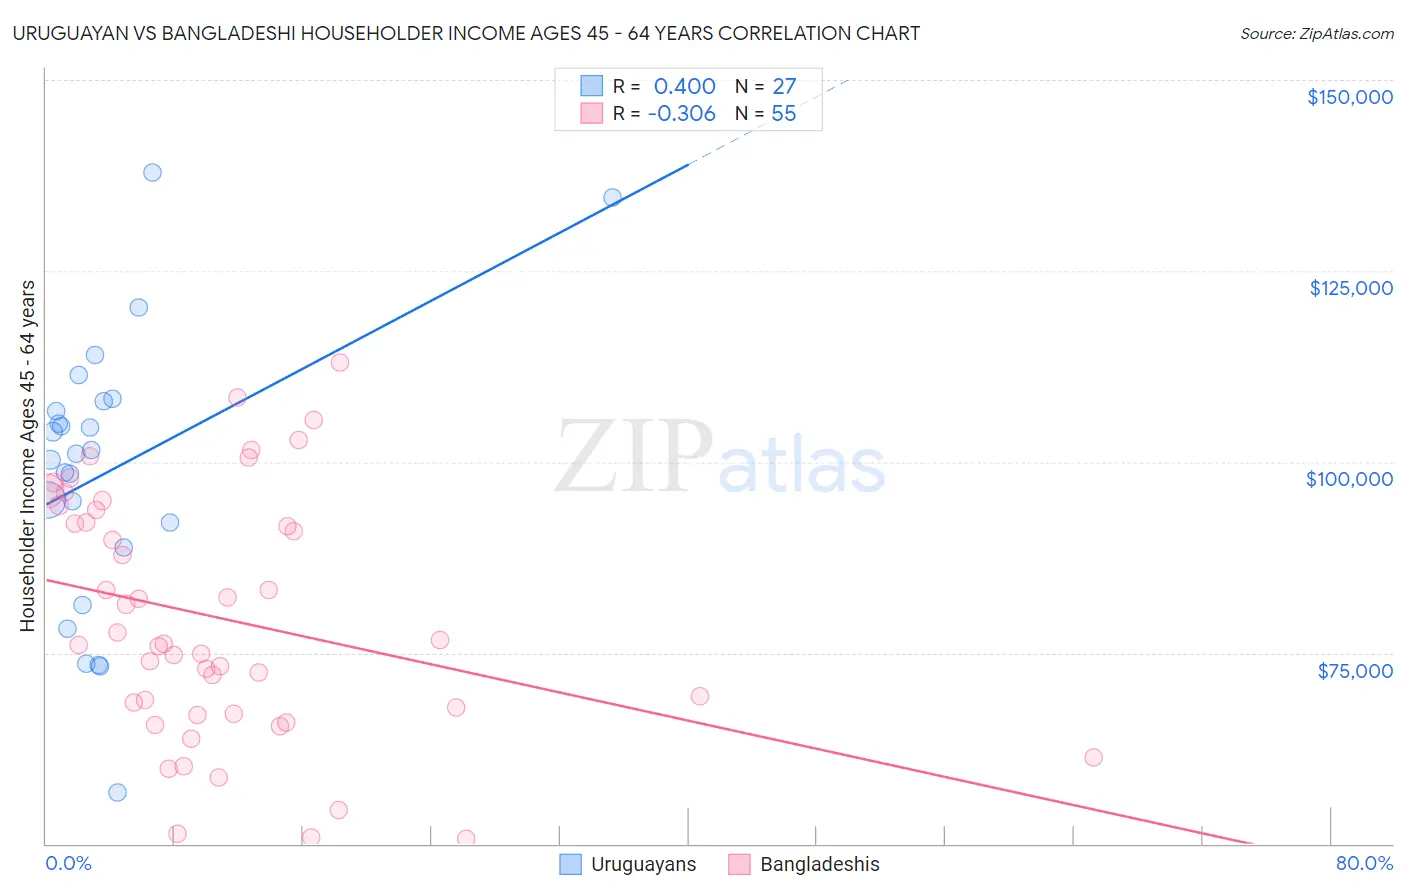 Uruguayan vs Bangladeshi Householder Income Ages 45 - 64 years